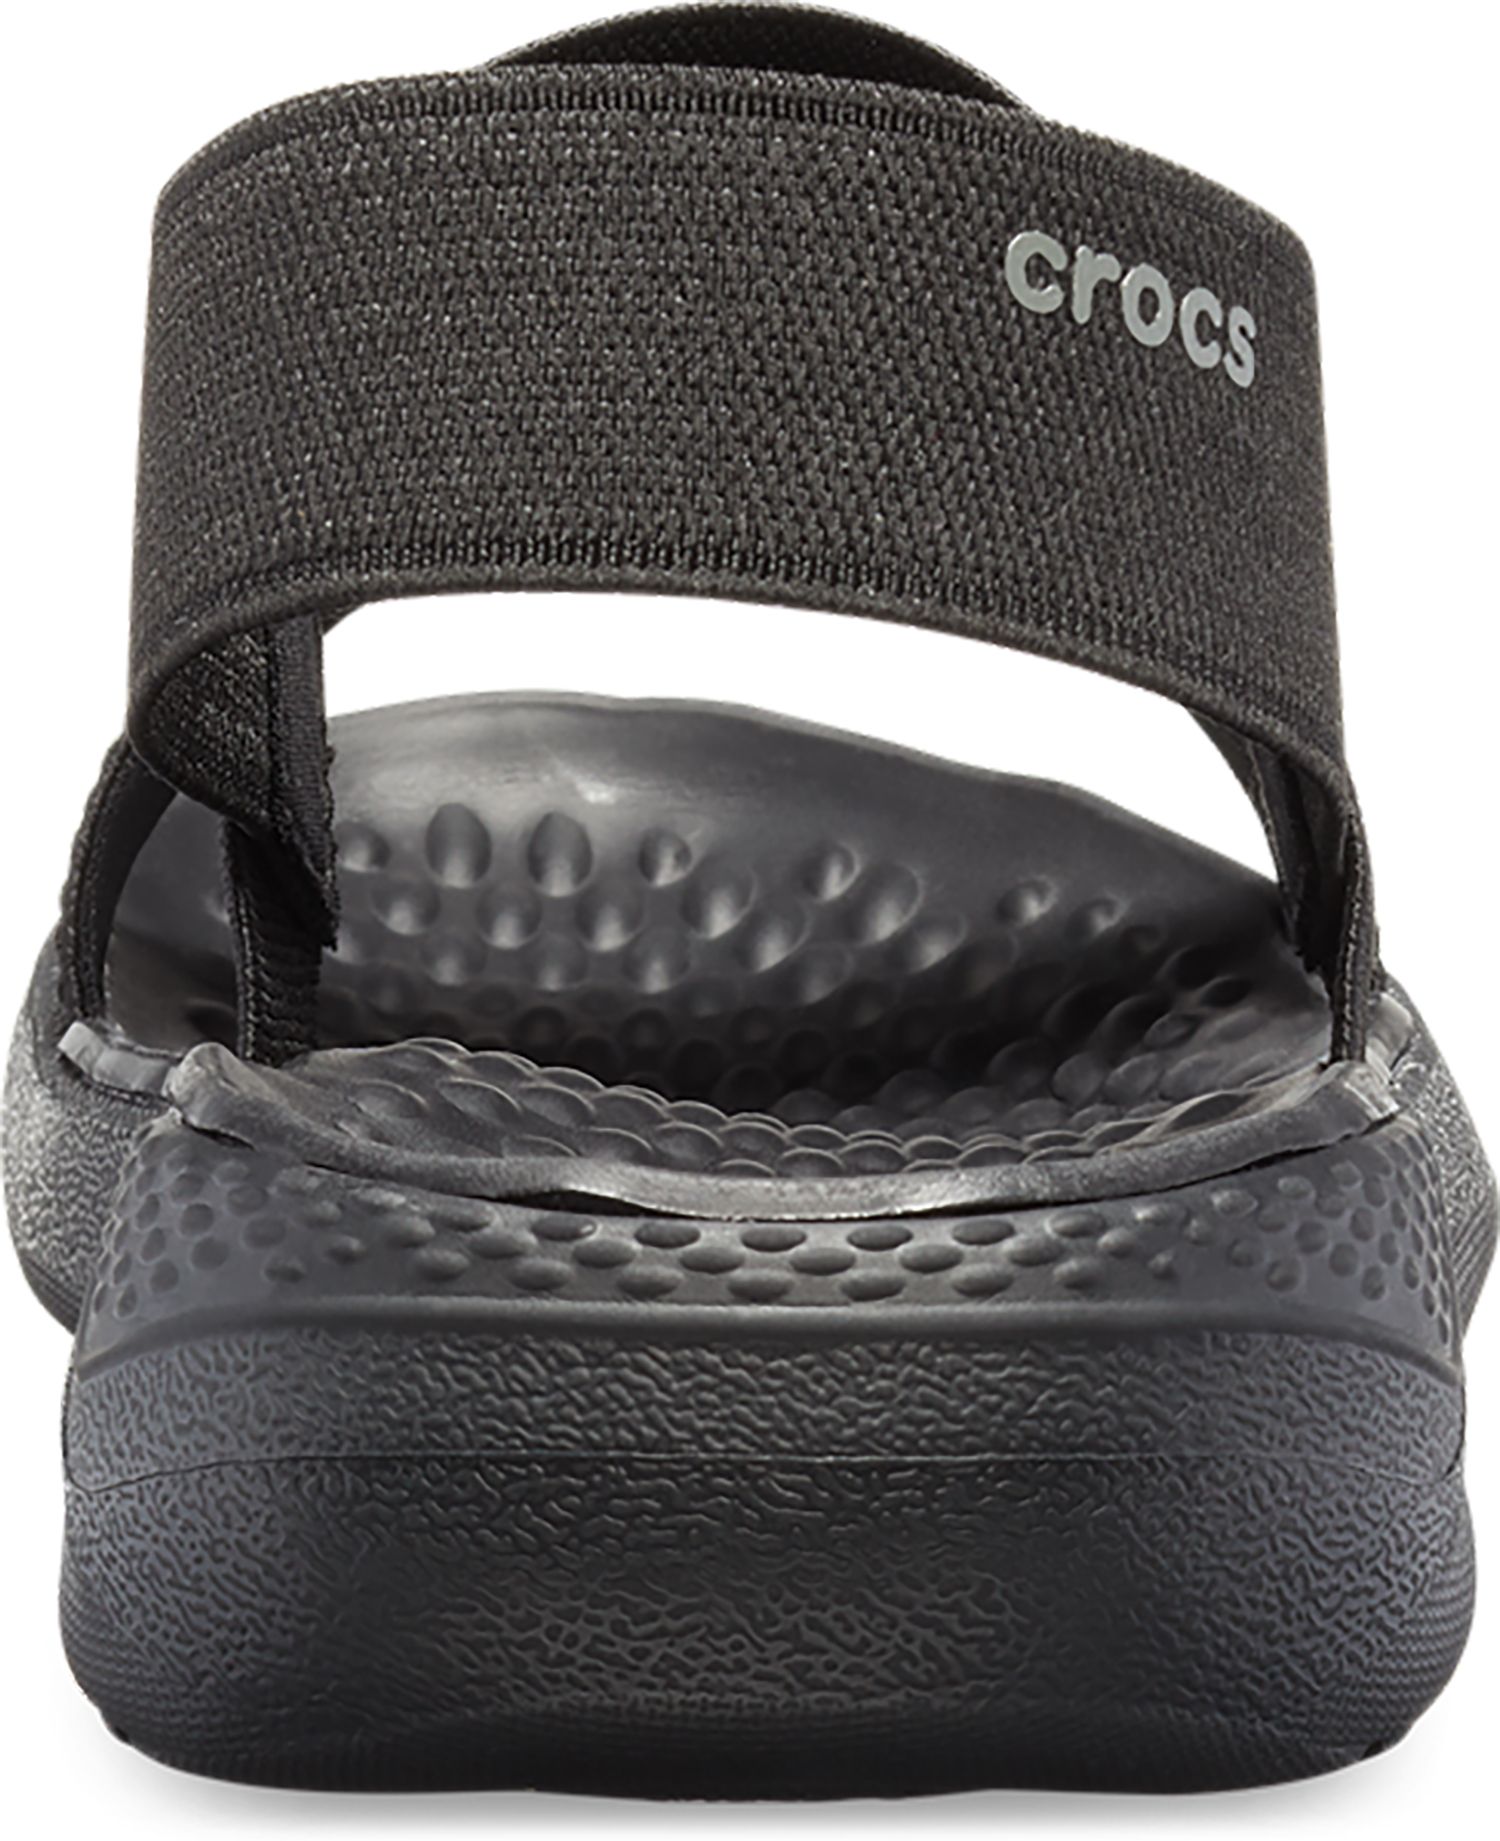 205106 crocs